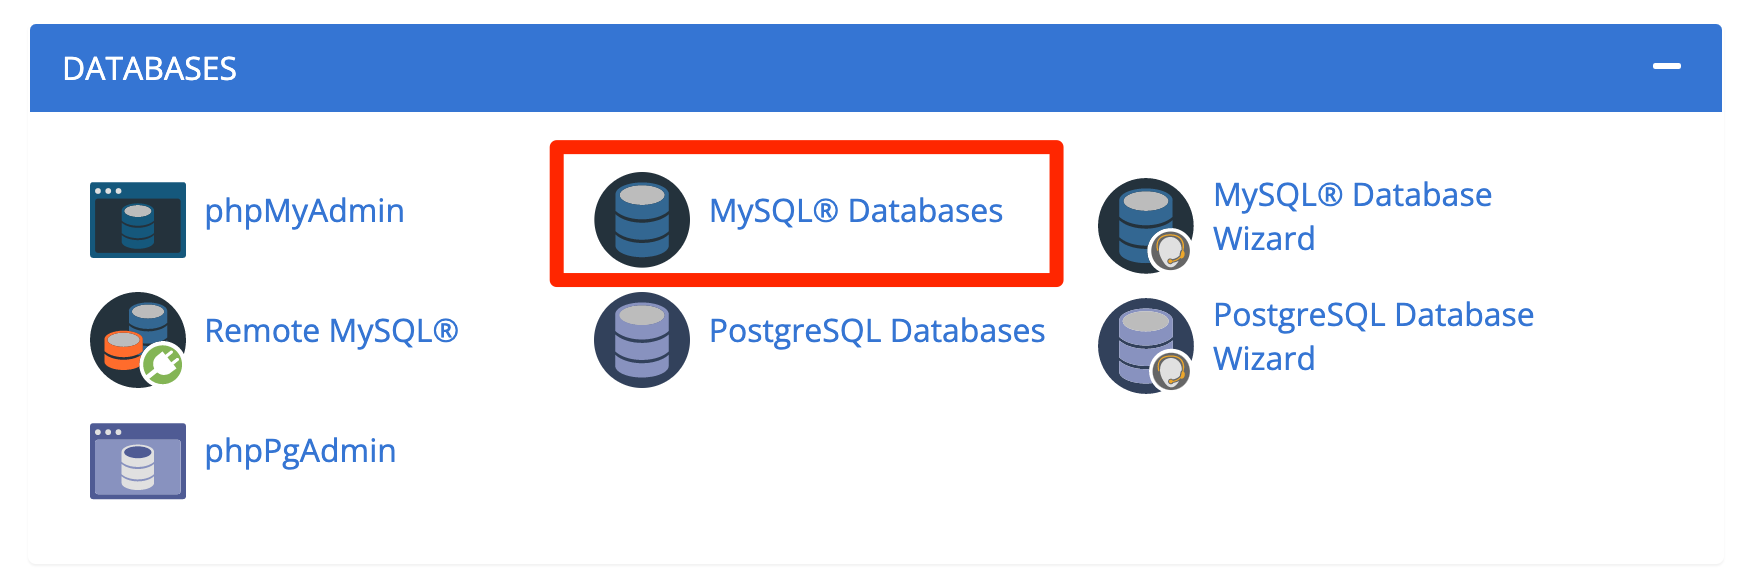 MySQL Databases on Bluehost's cPanel.